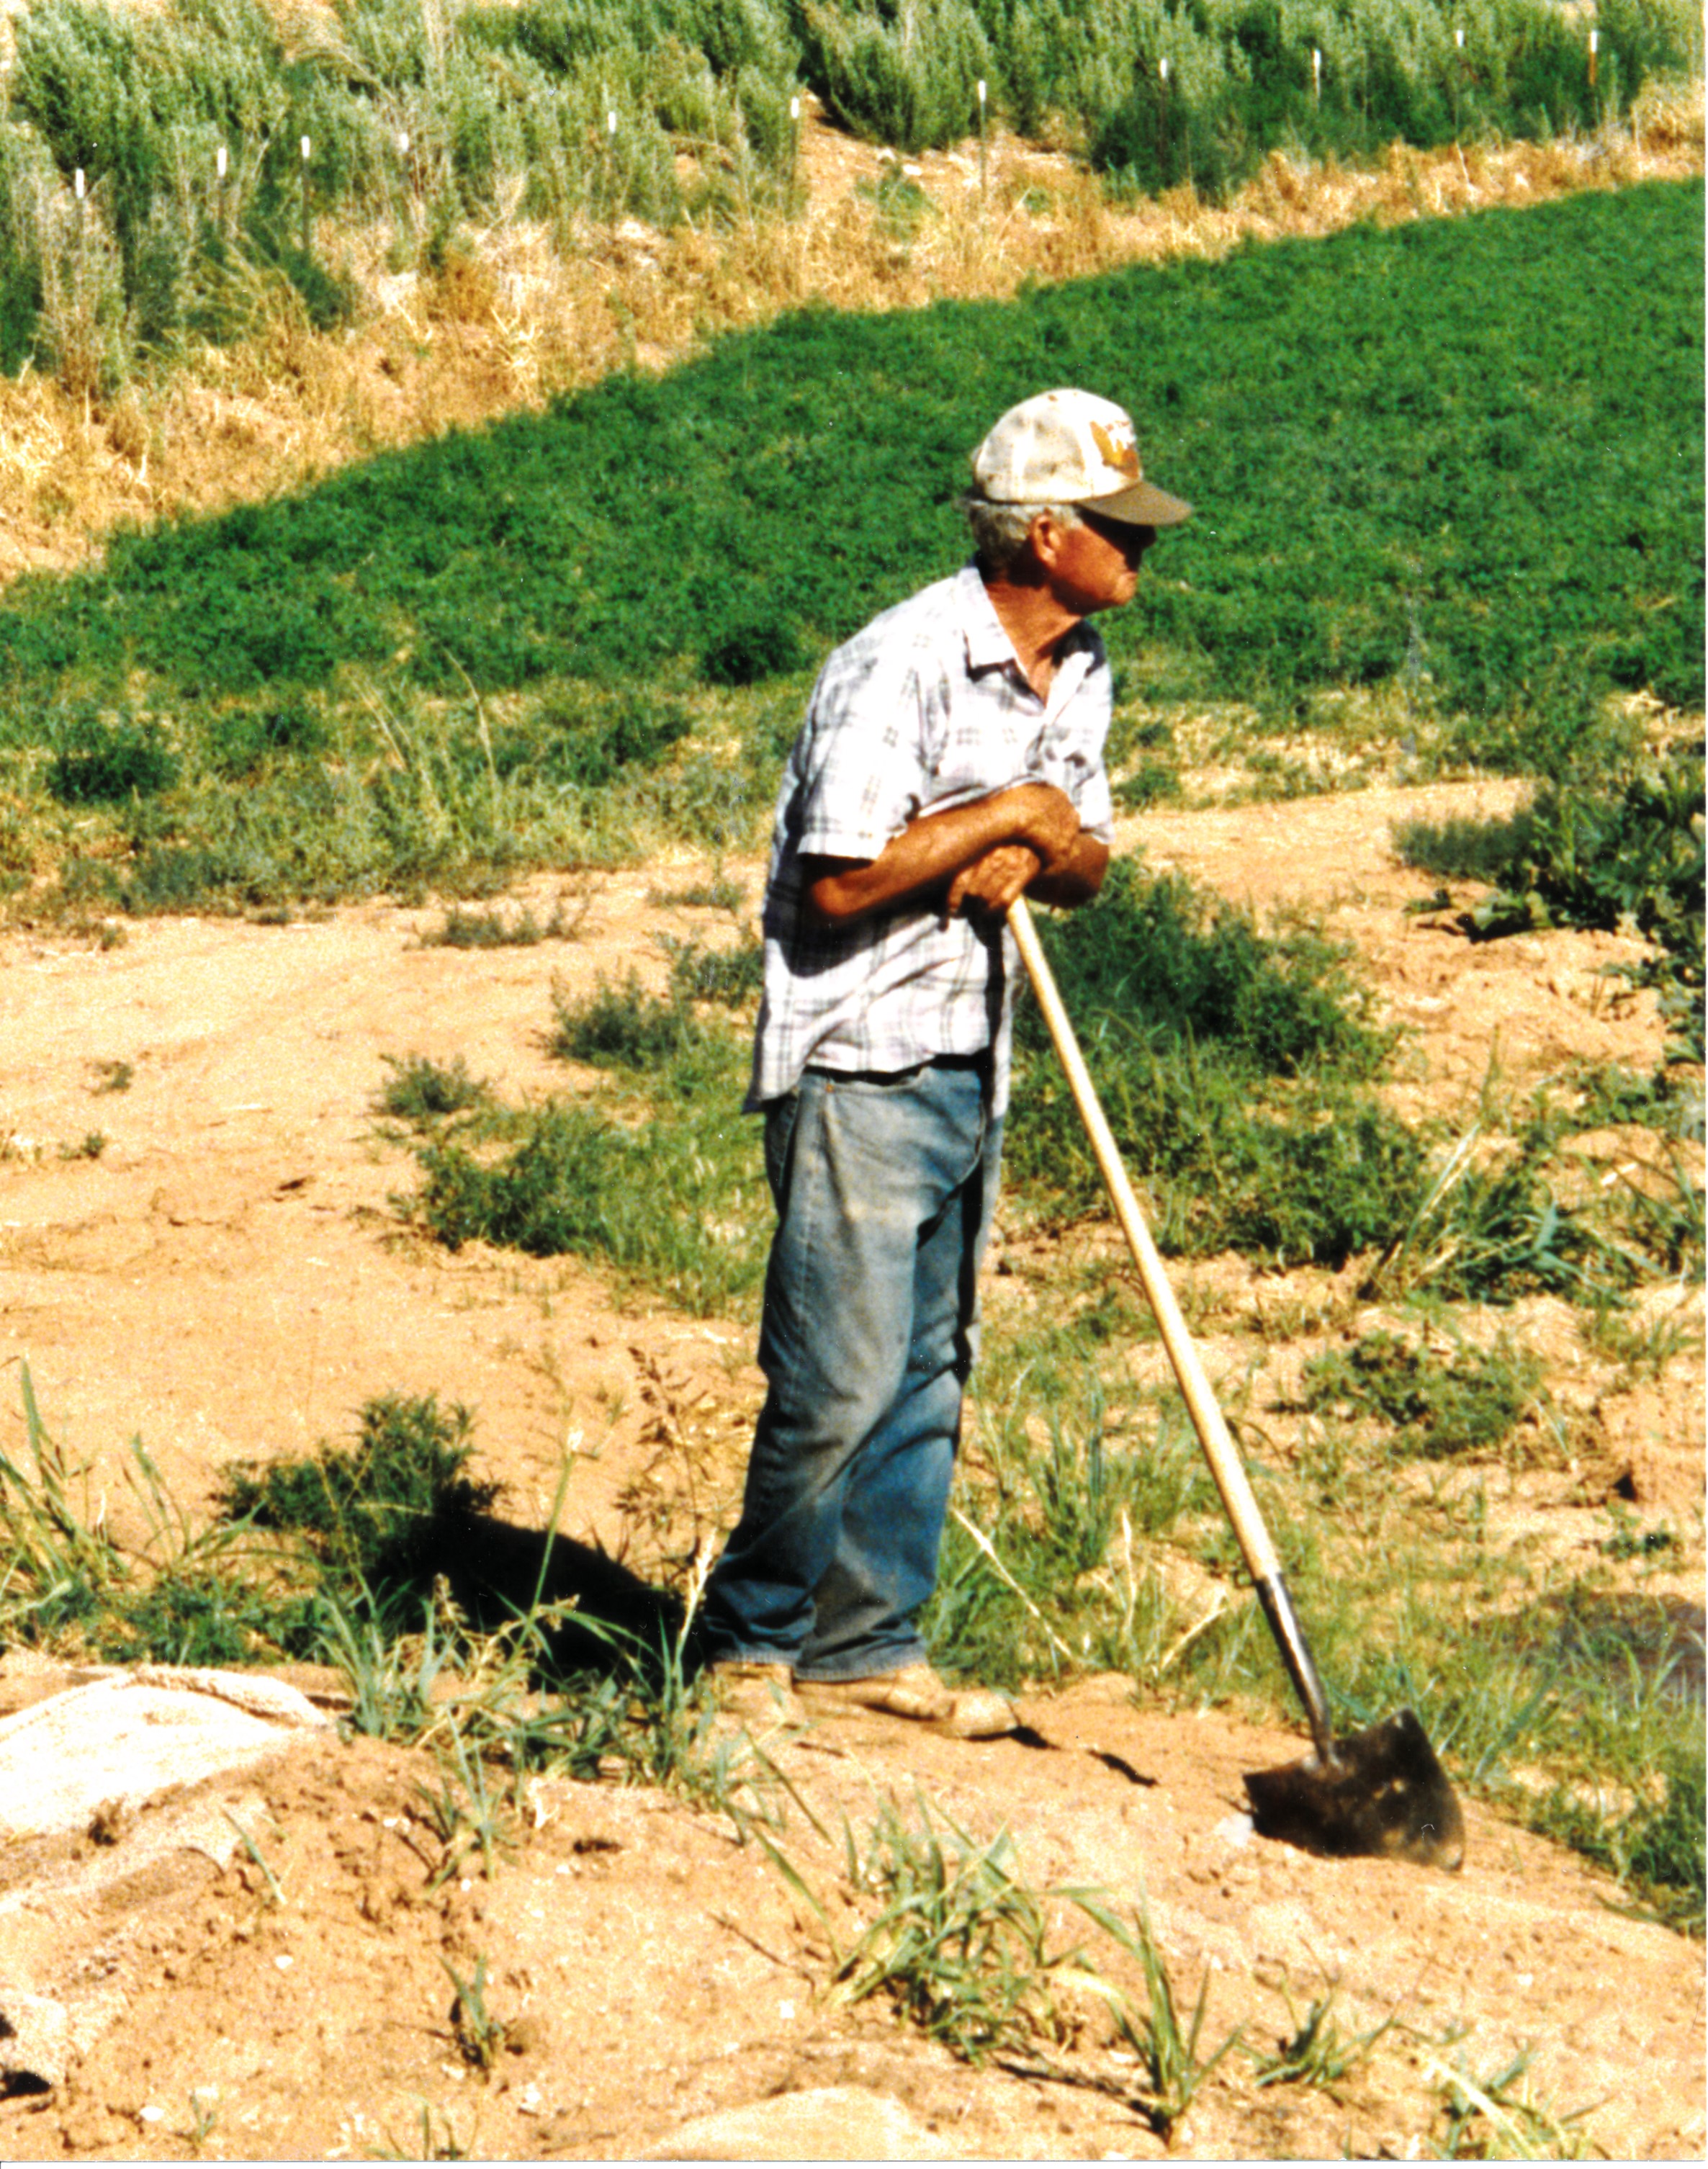 Landon Frei standing with a shovel on his farm